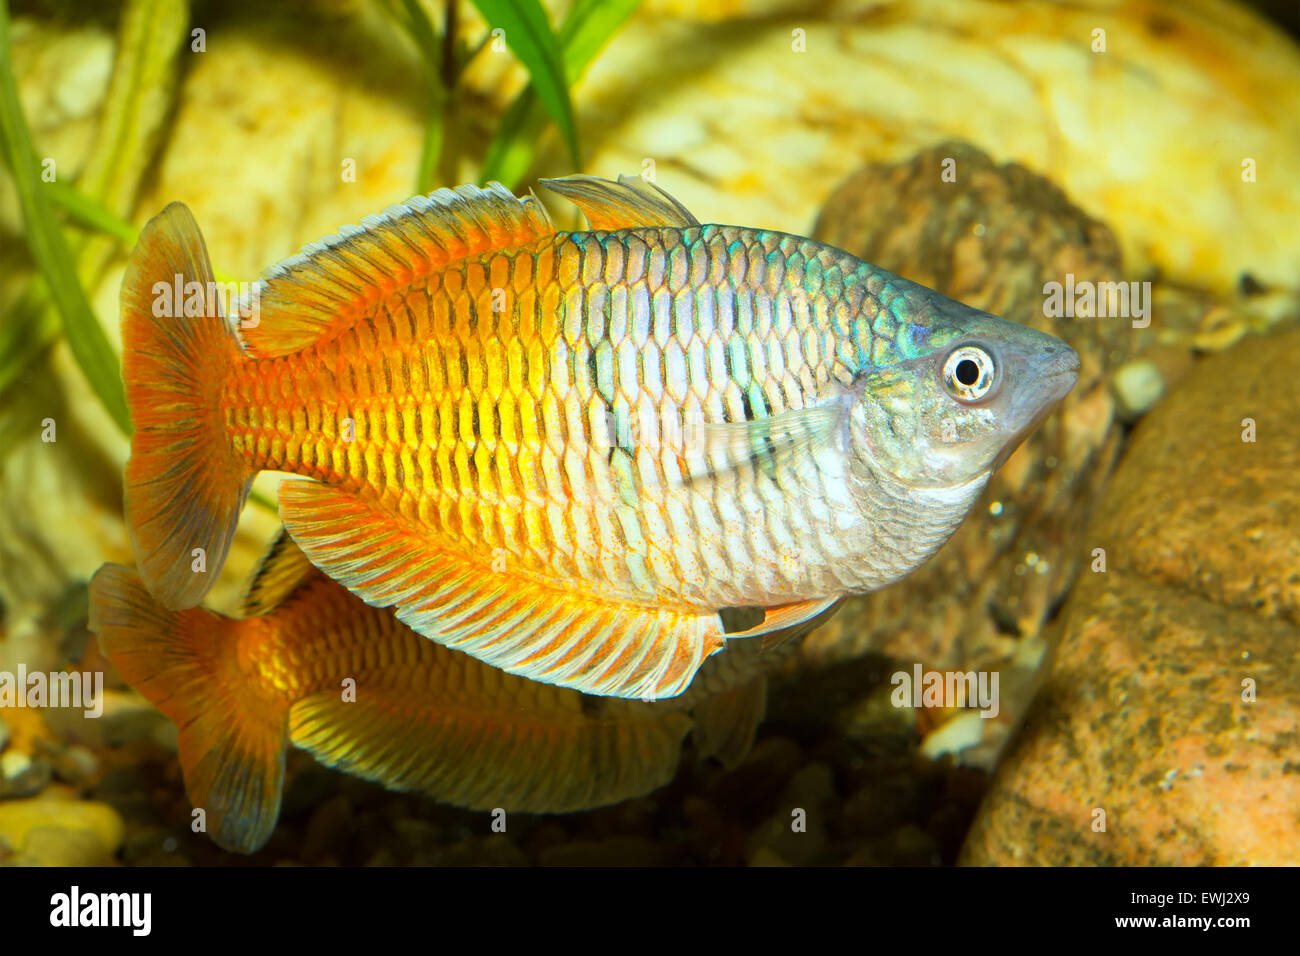 Rainbow fish in aquarium hi-res stock photography and images - Alamy